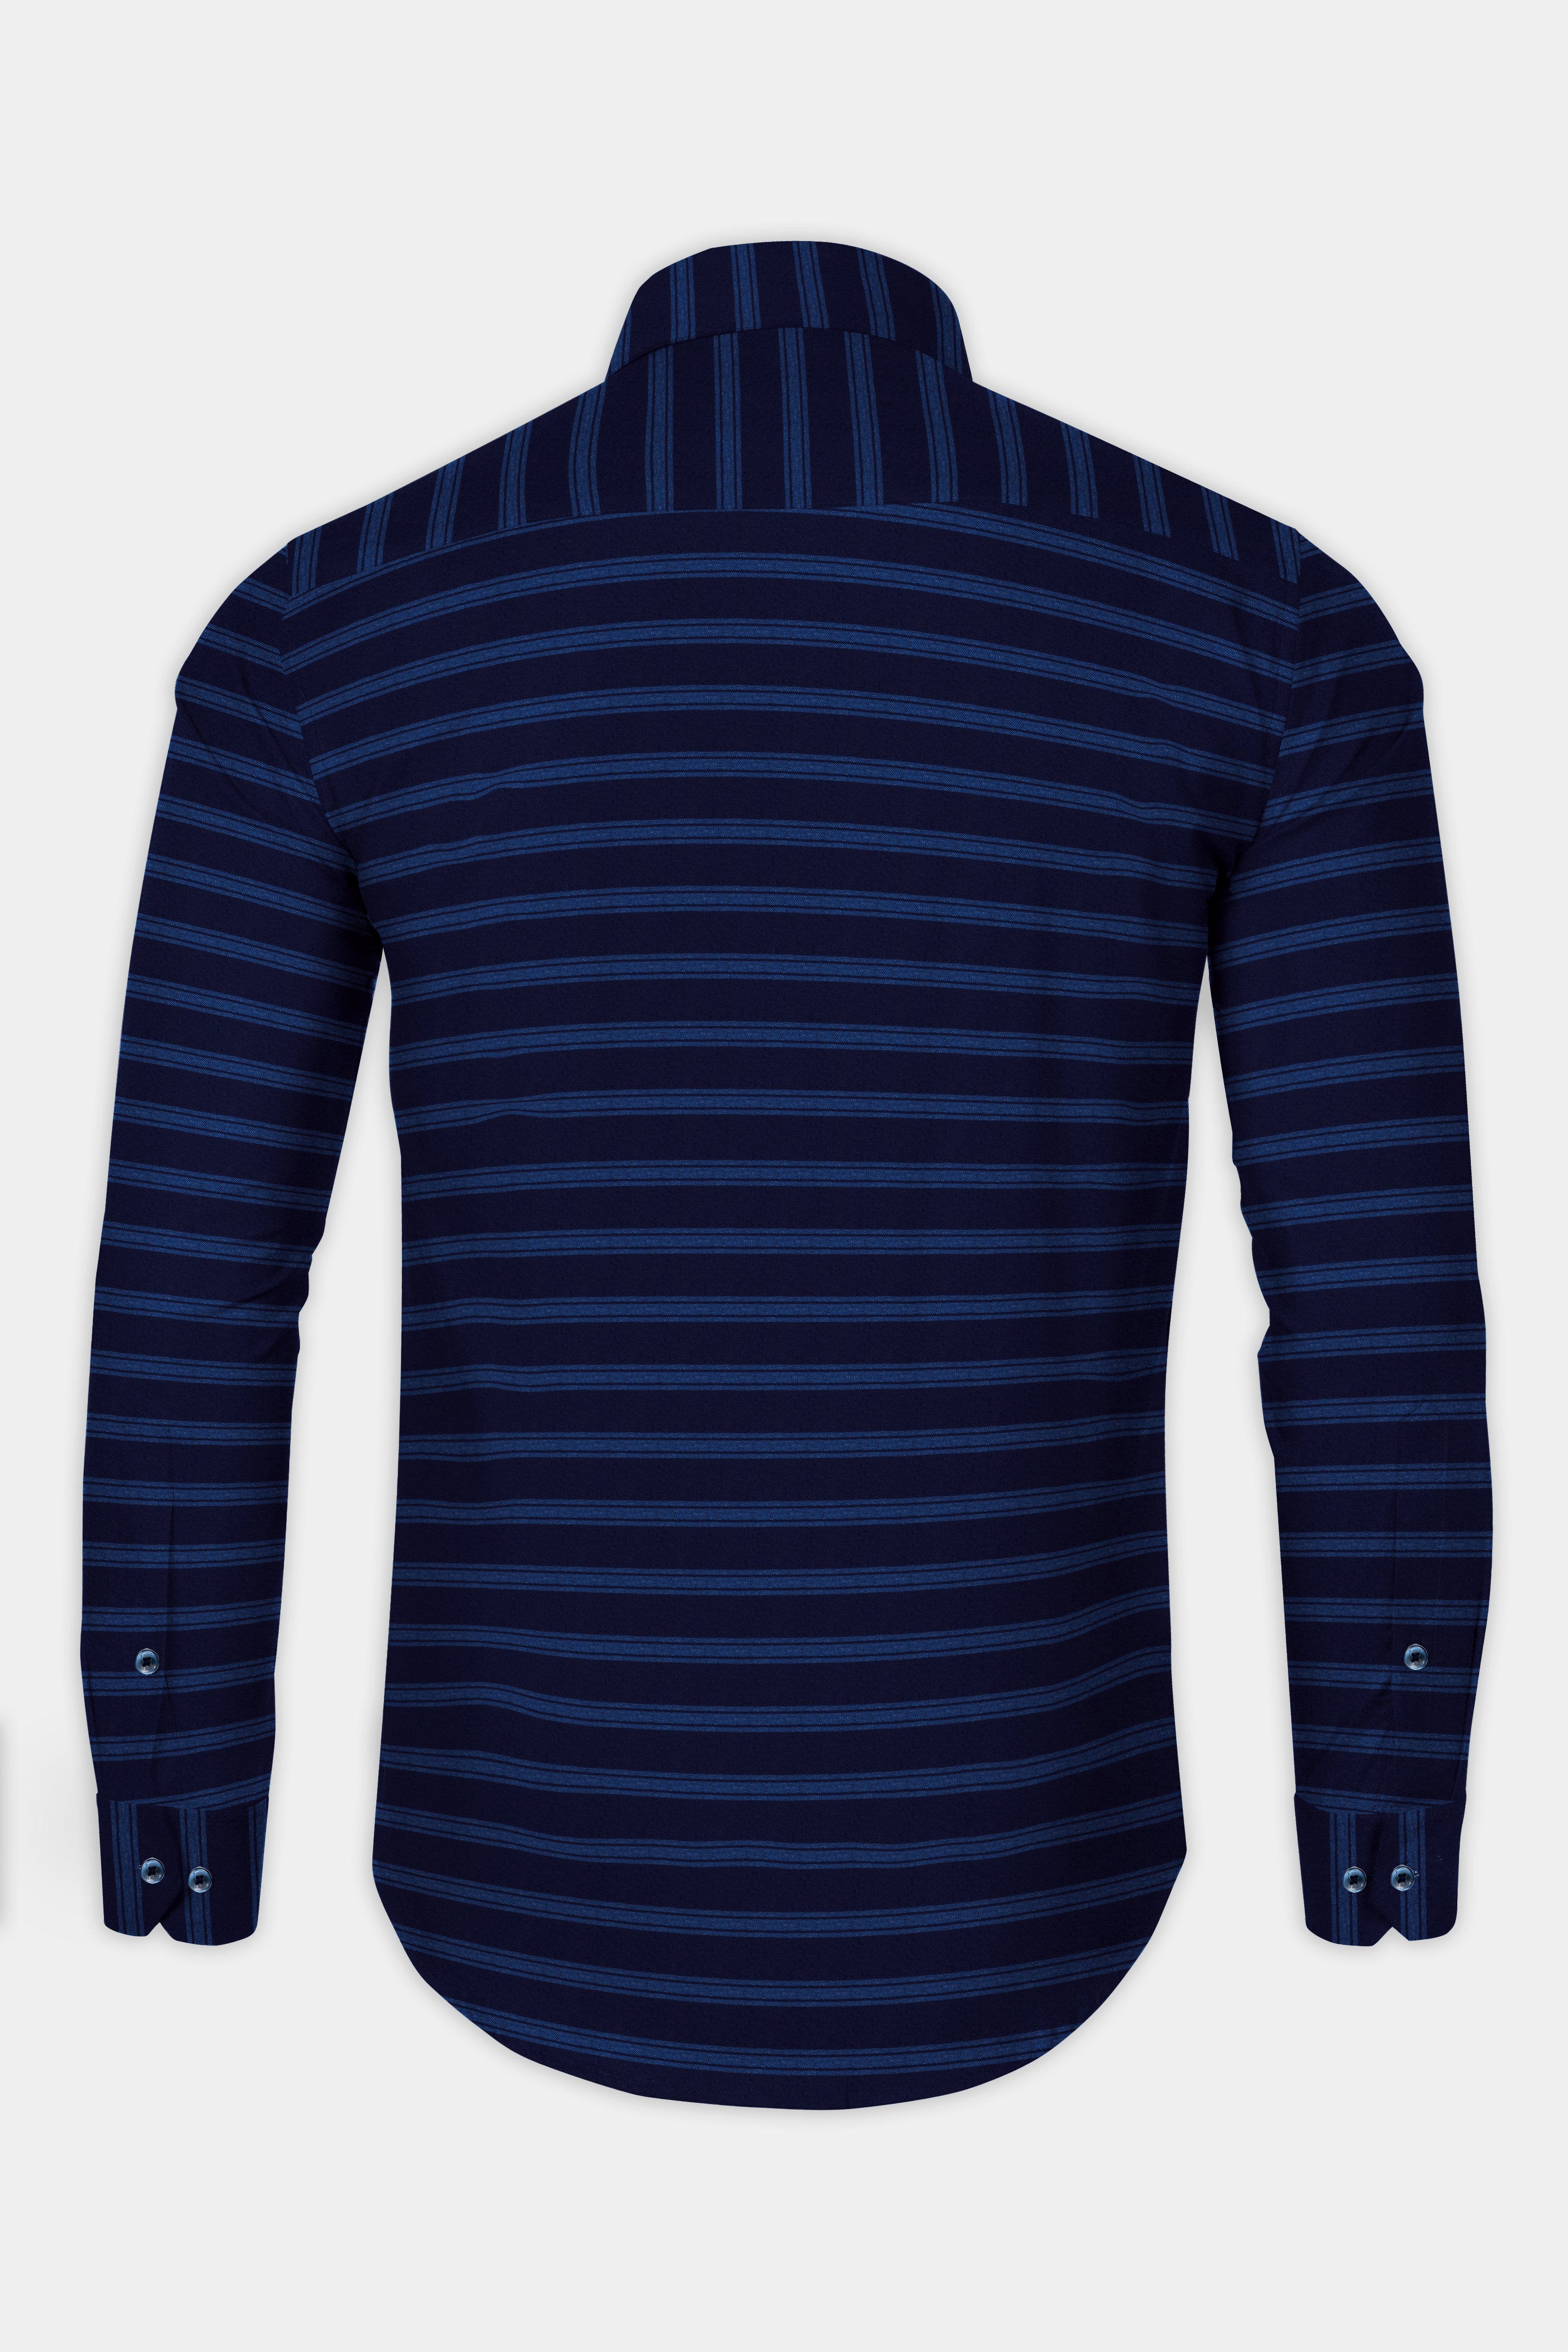 Mirage and Rhino Blue Striped Indigo Denim Shirt